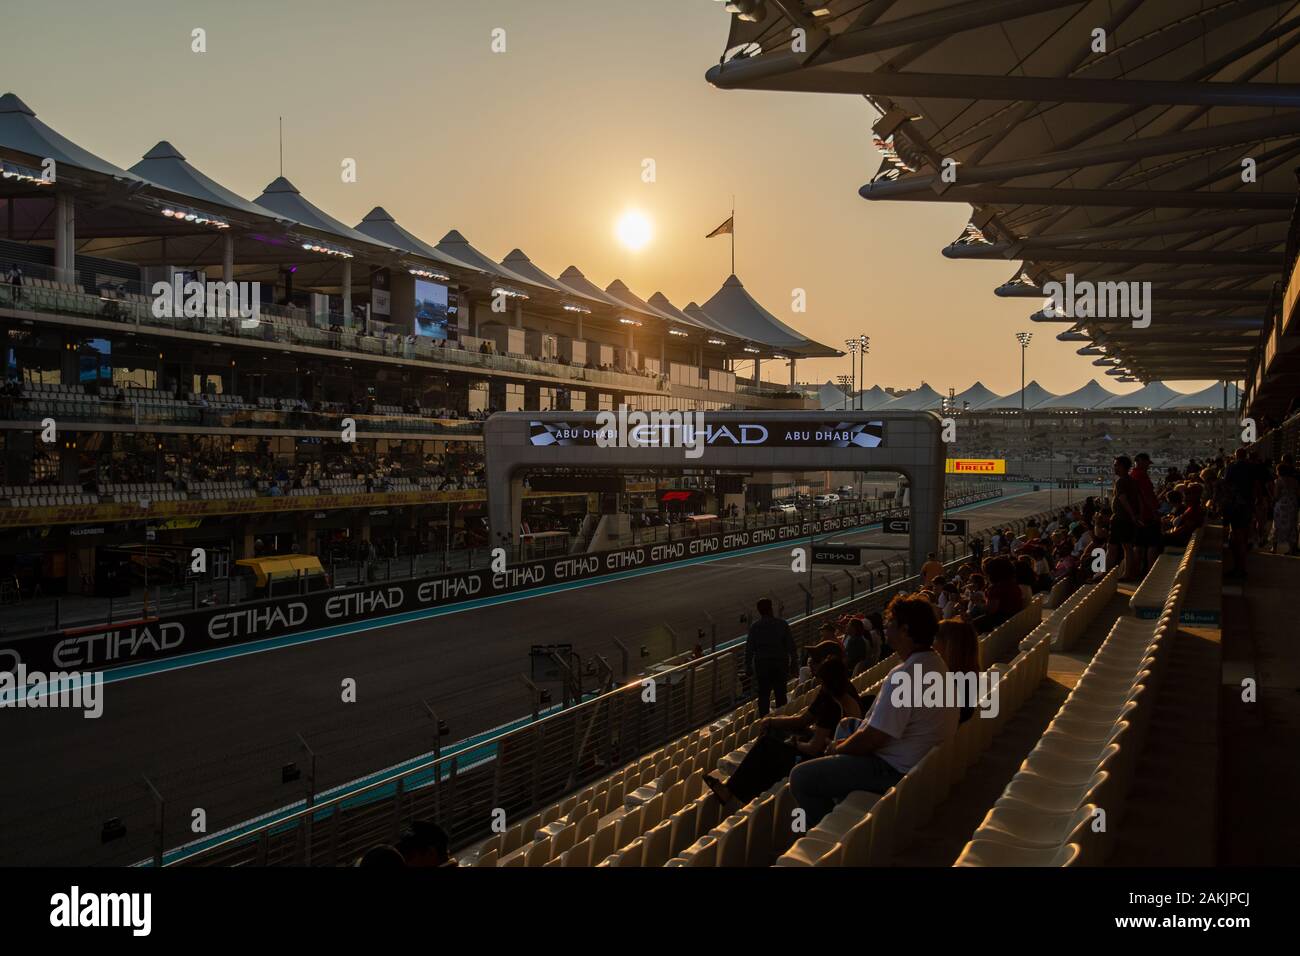 Abu Dhabi F1 pista di Formula Uno sponsorizzata da Etihad Airways su Yas Island, Abu Dhabi, Emirati Arabi Uniti al tramonto Foto Stock